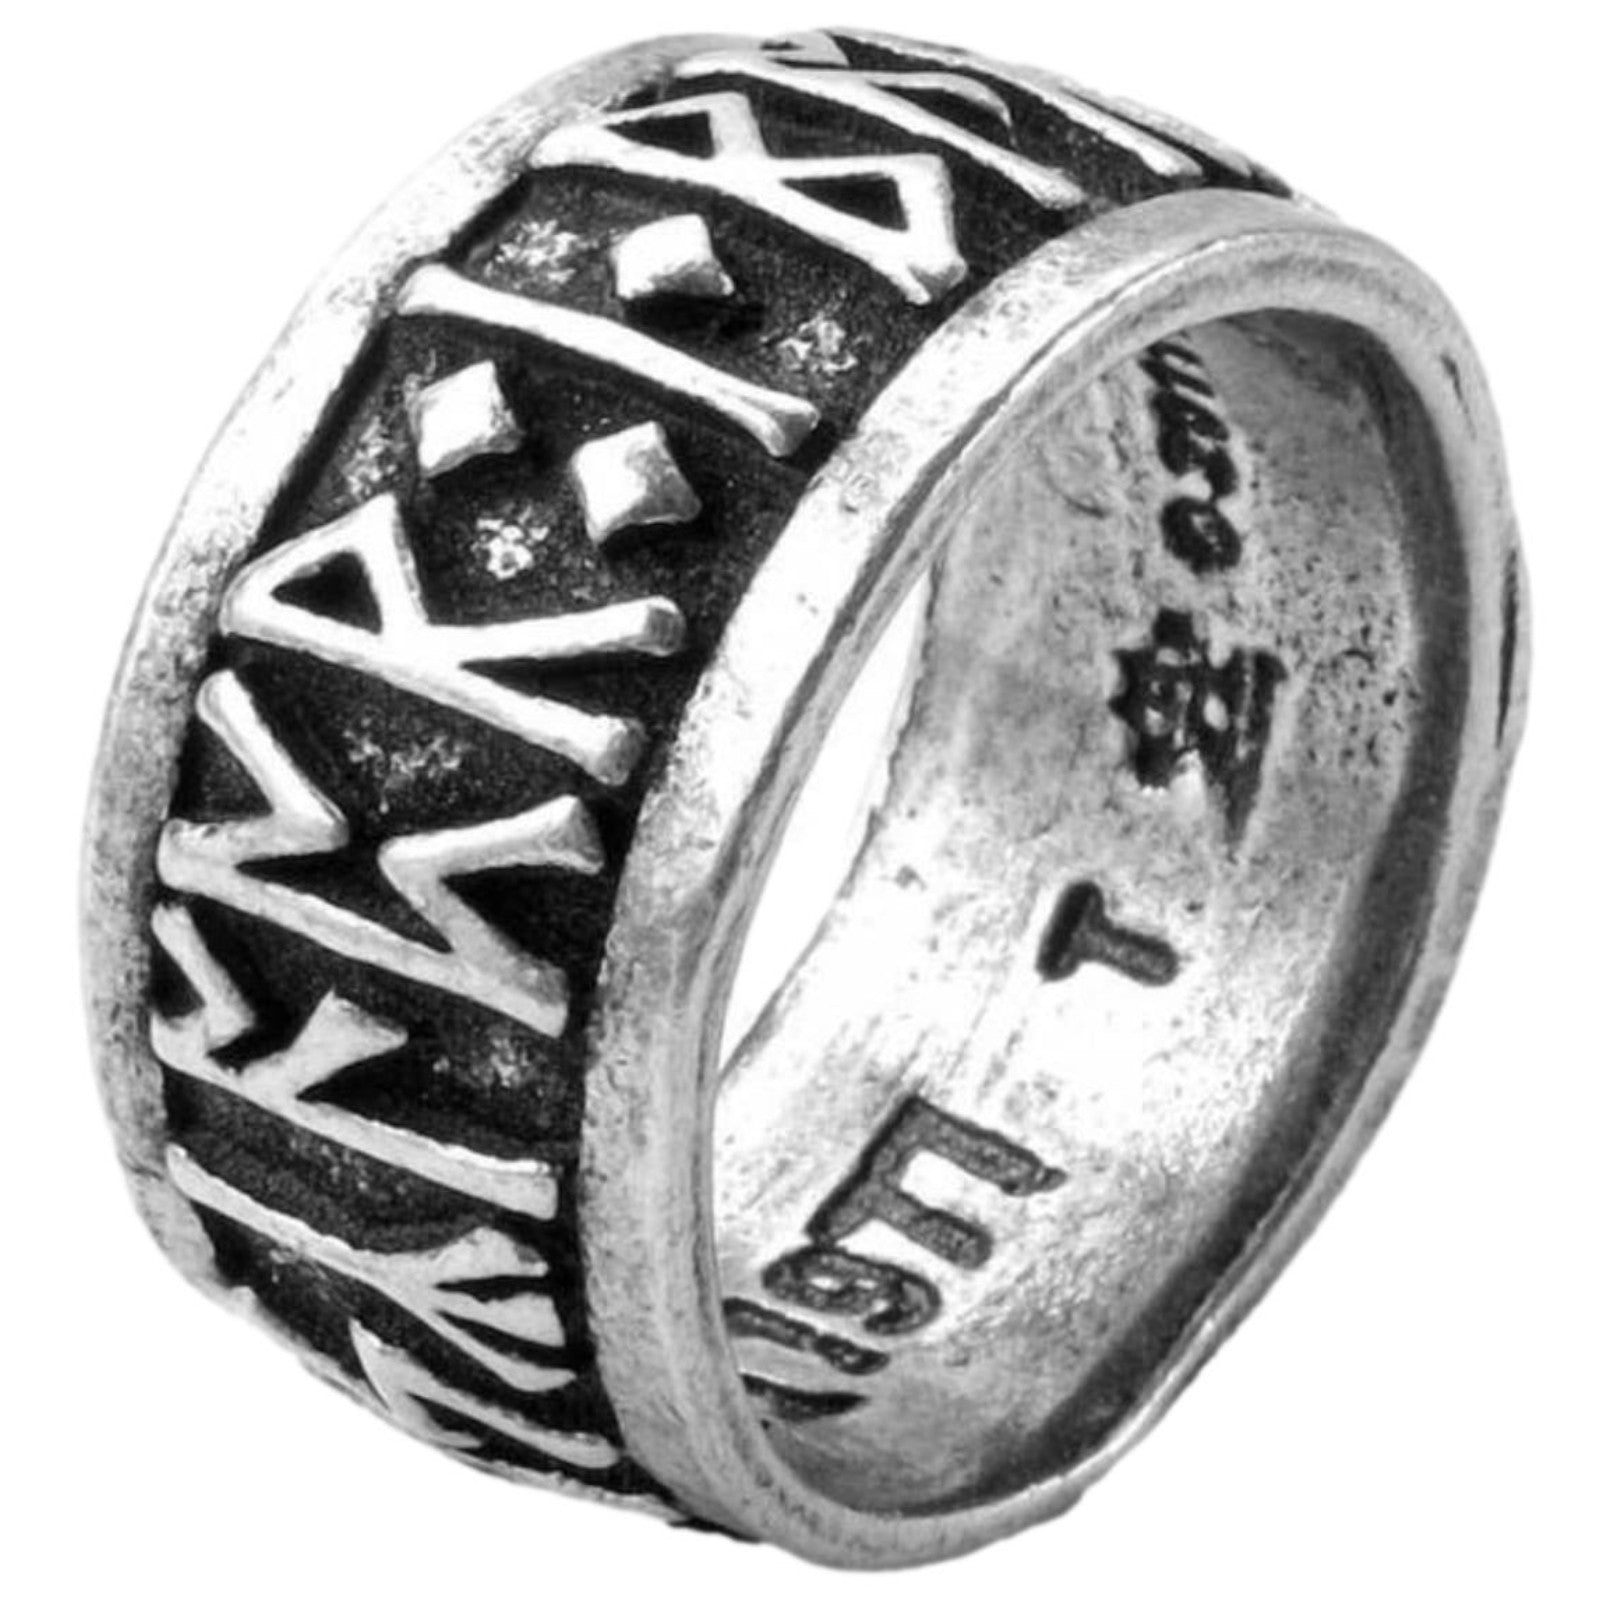 Alchemy England Runeband Ring